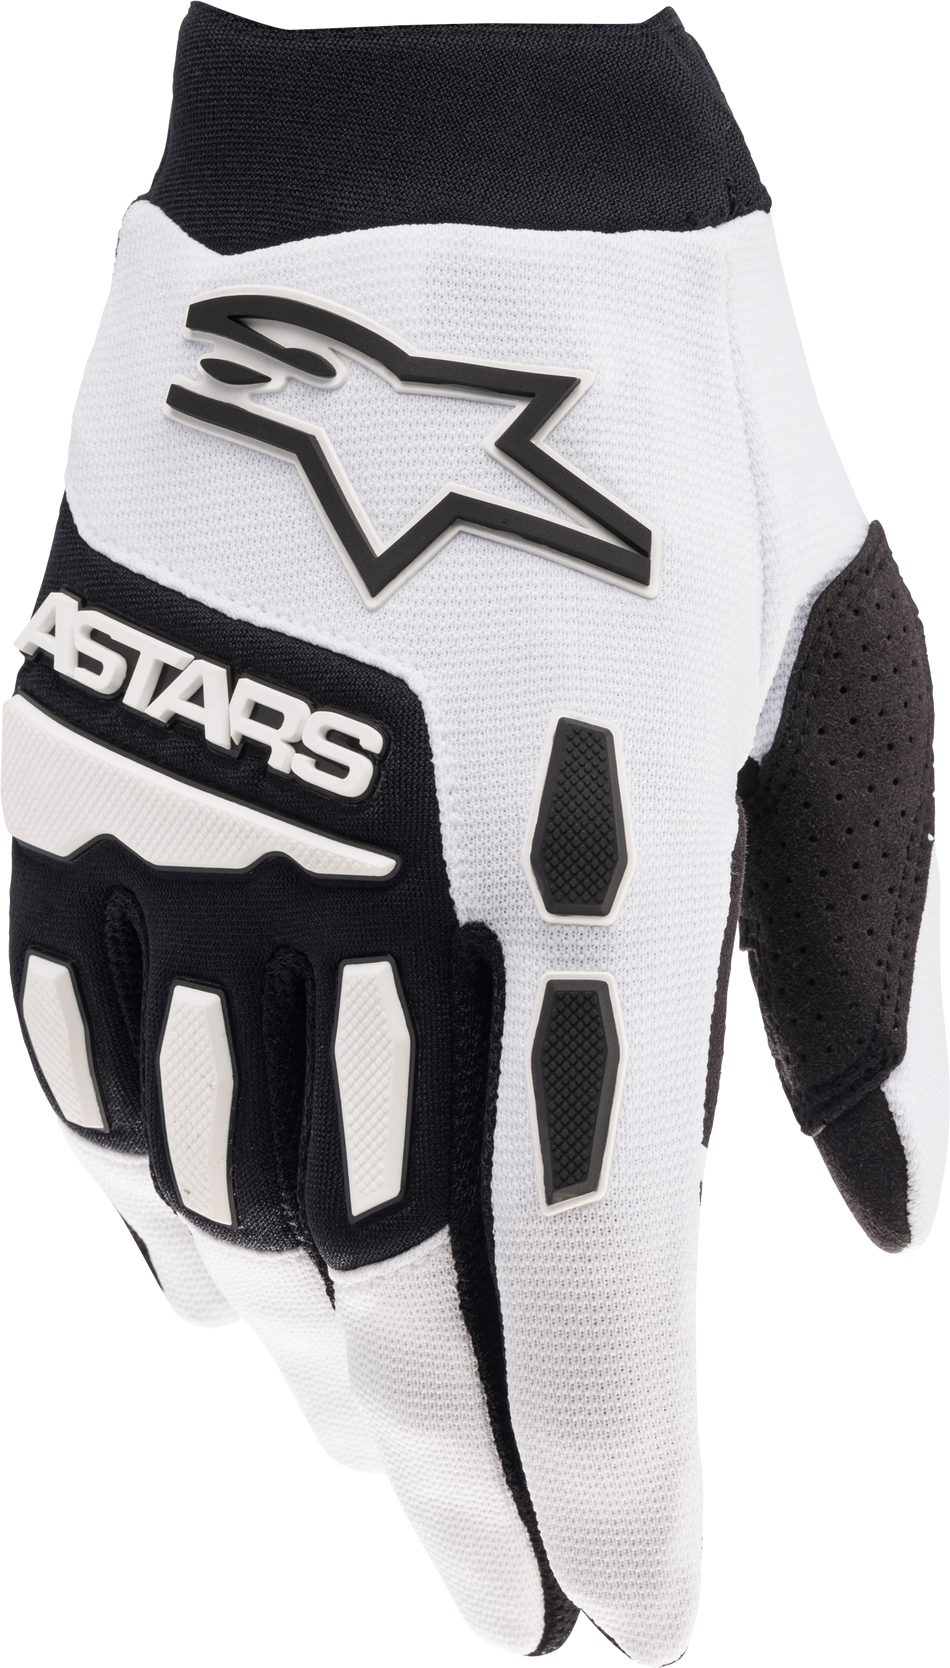 ALPINESTARS Youth Full Bore Gloves White/Black Lg 3543622-21-L